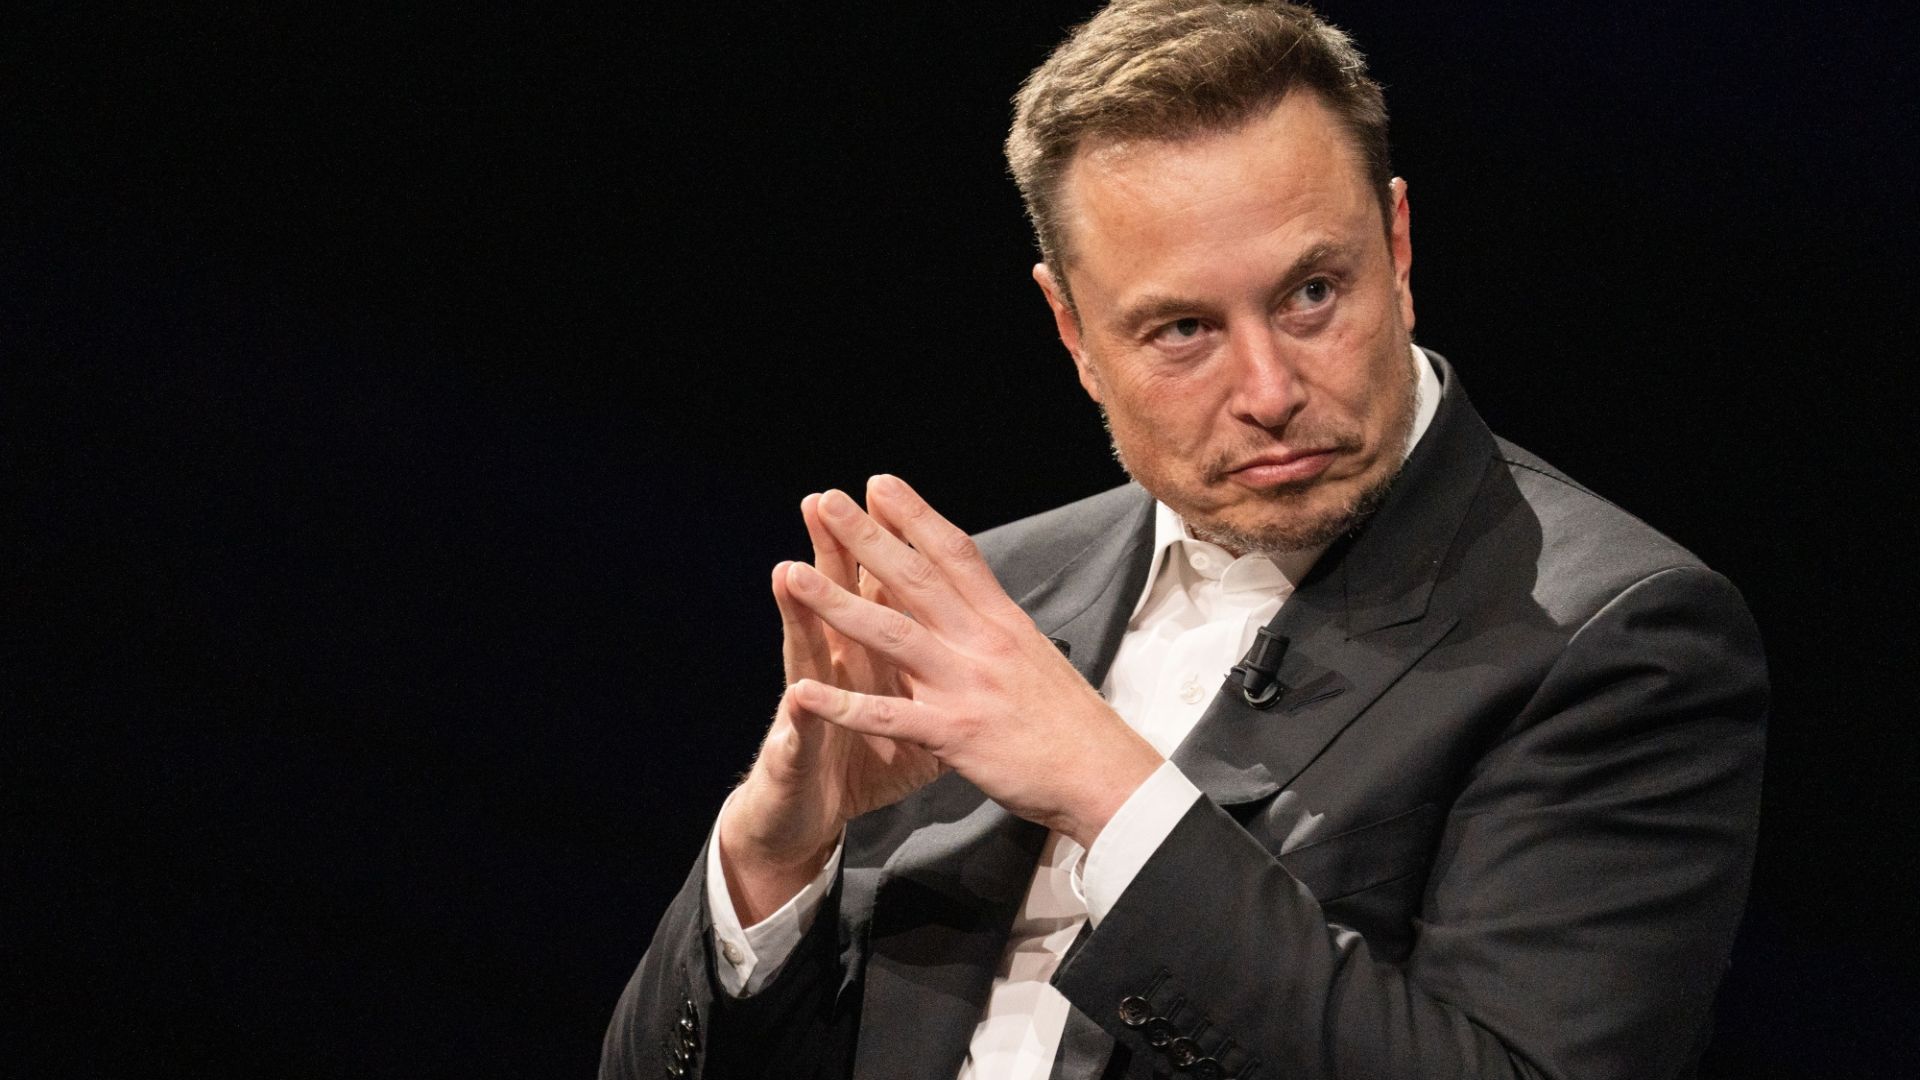 Elon Musk opposes TikTok’s ban however ‘ban may benefit X platform’